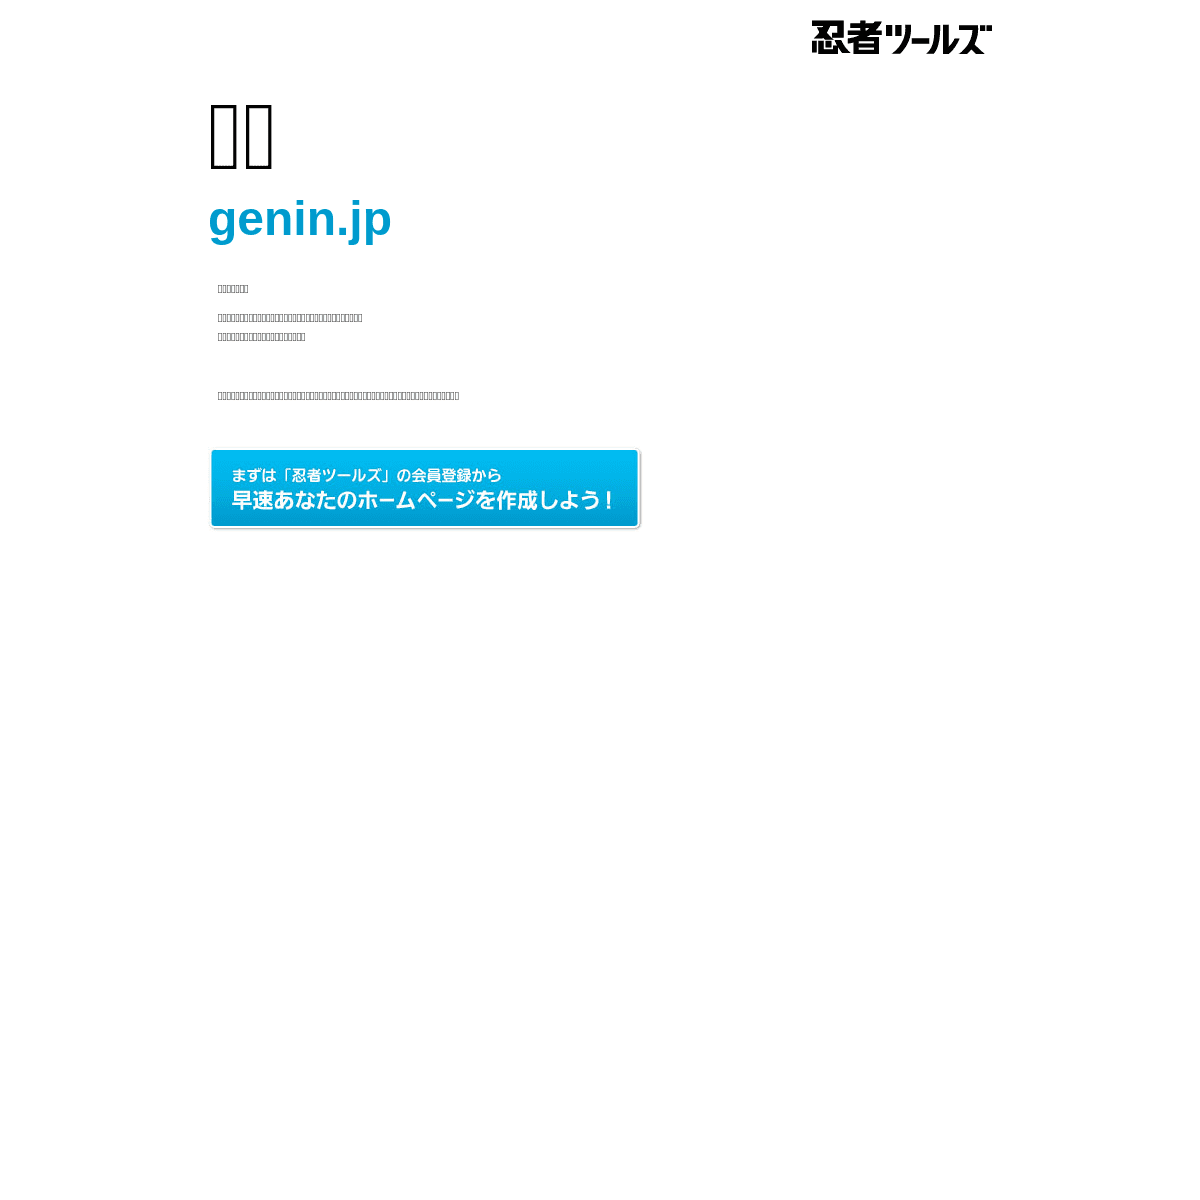 A complete backup of https://genin.jp